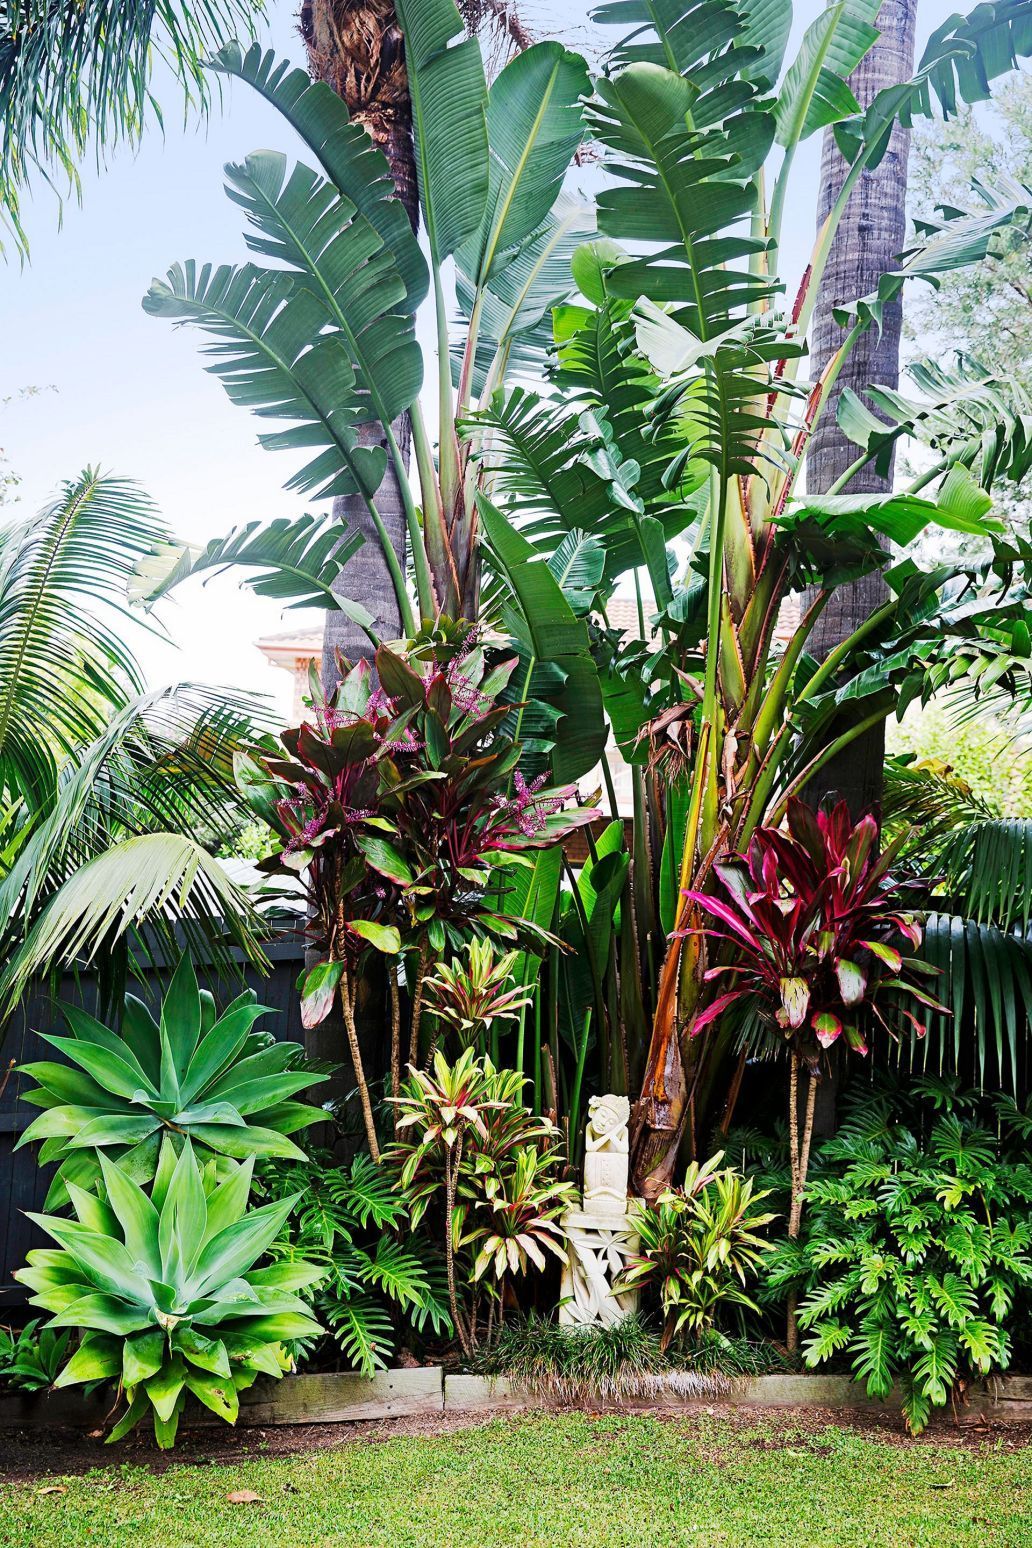 South Florida Tropical Landscaping Idea (South Florida Tropical Landscaping Idea) design ideas and photos -   15 plants Tropical landscapes ideas